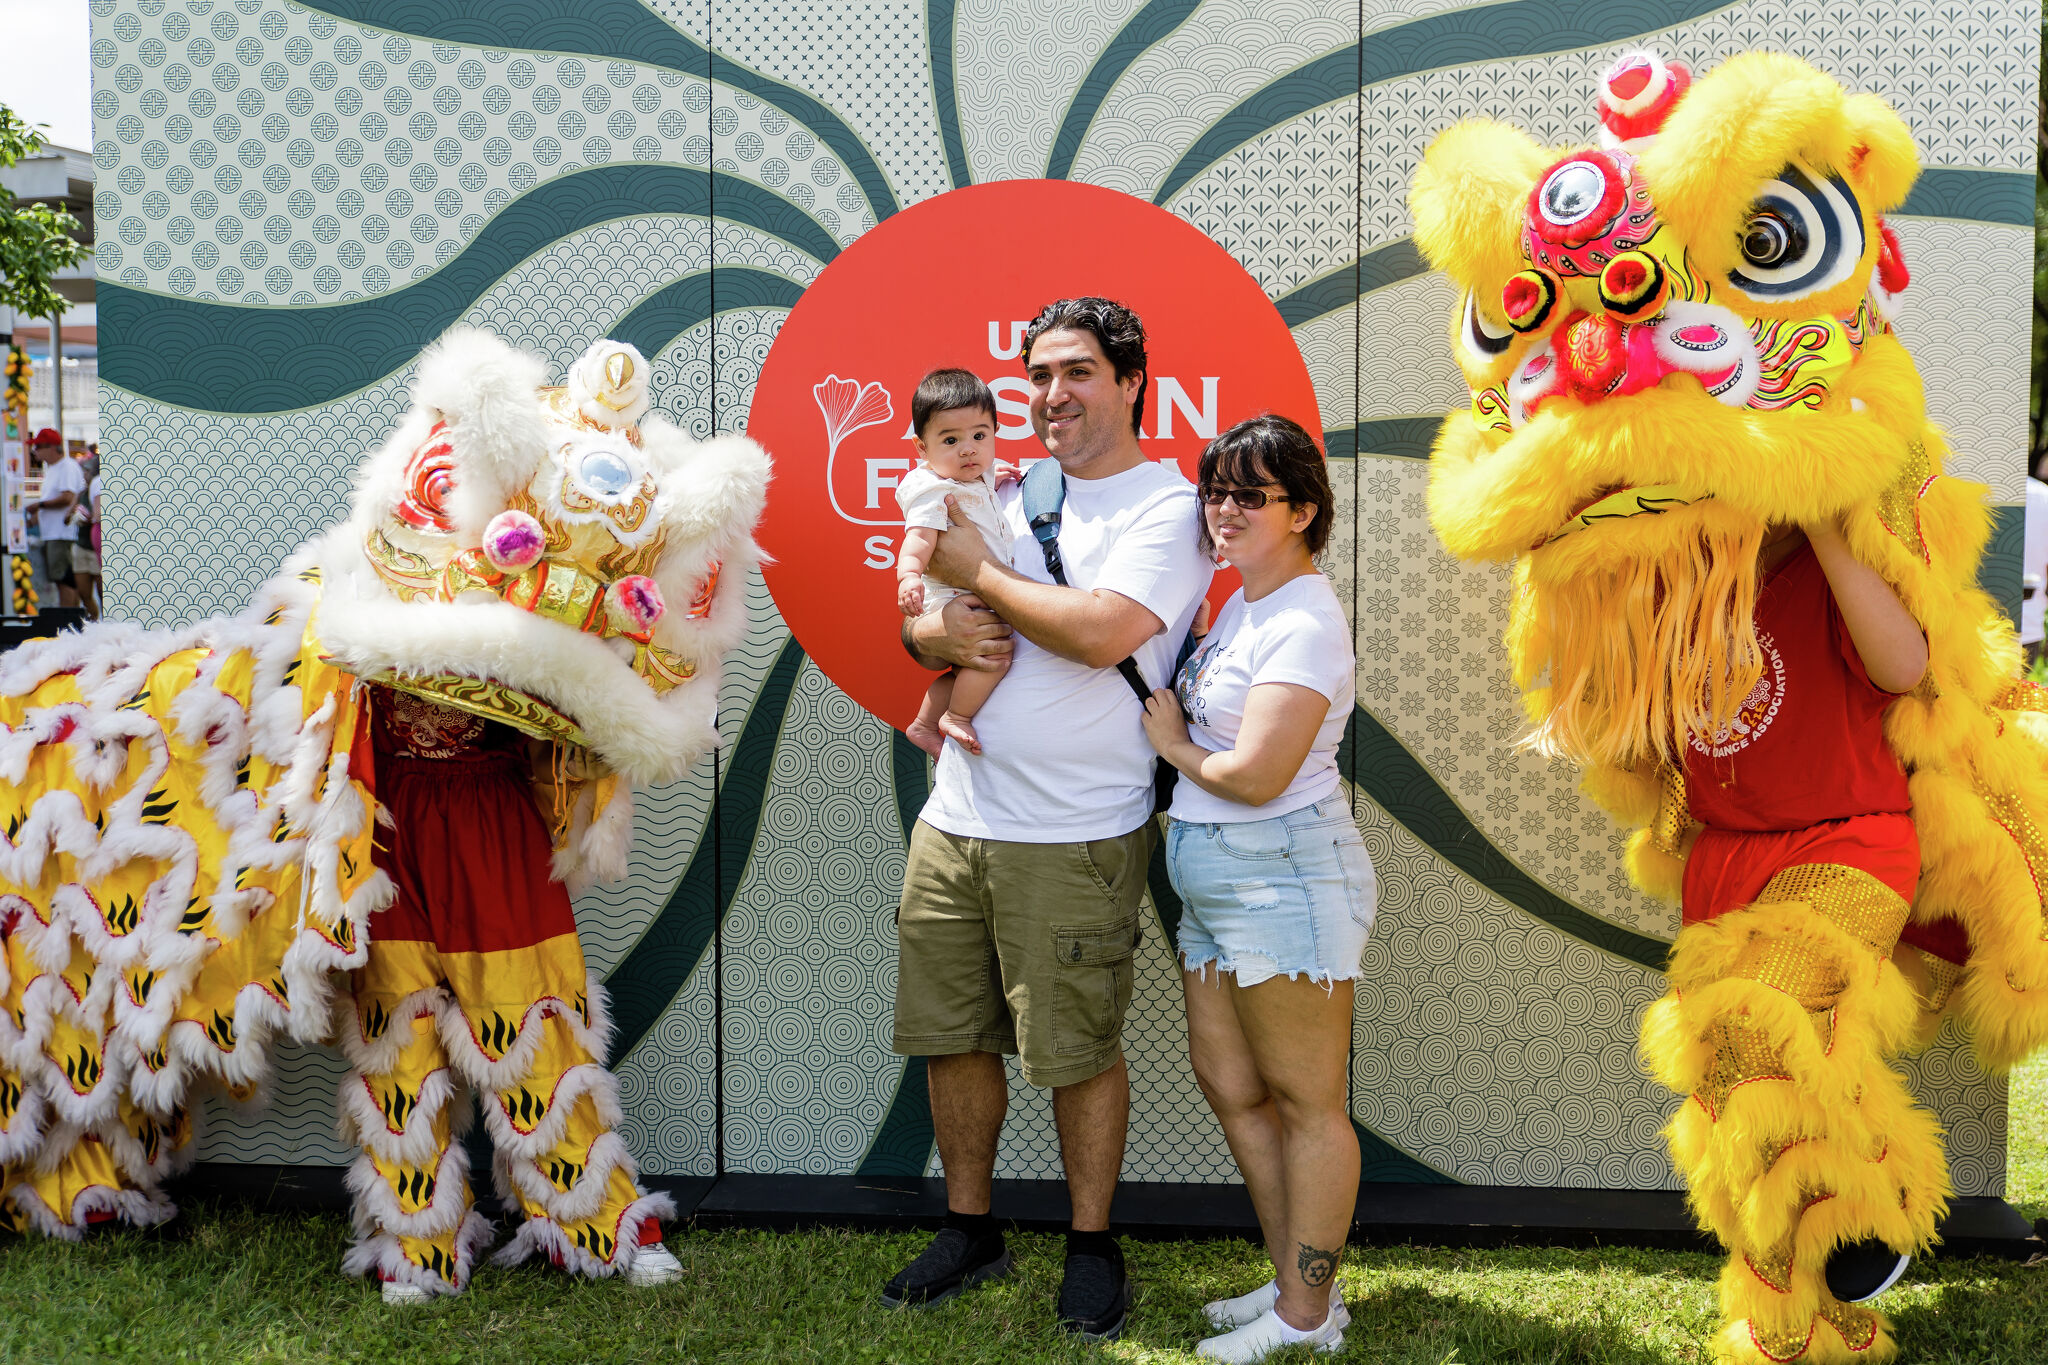 Asian Festival returns to downtown San Antonio after hiatus